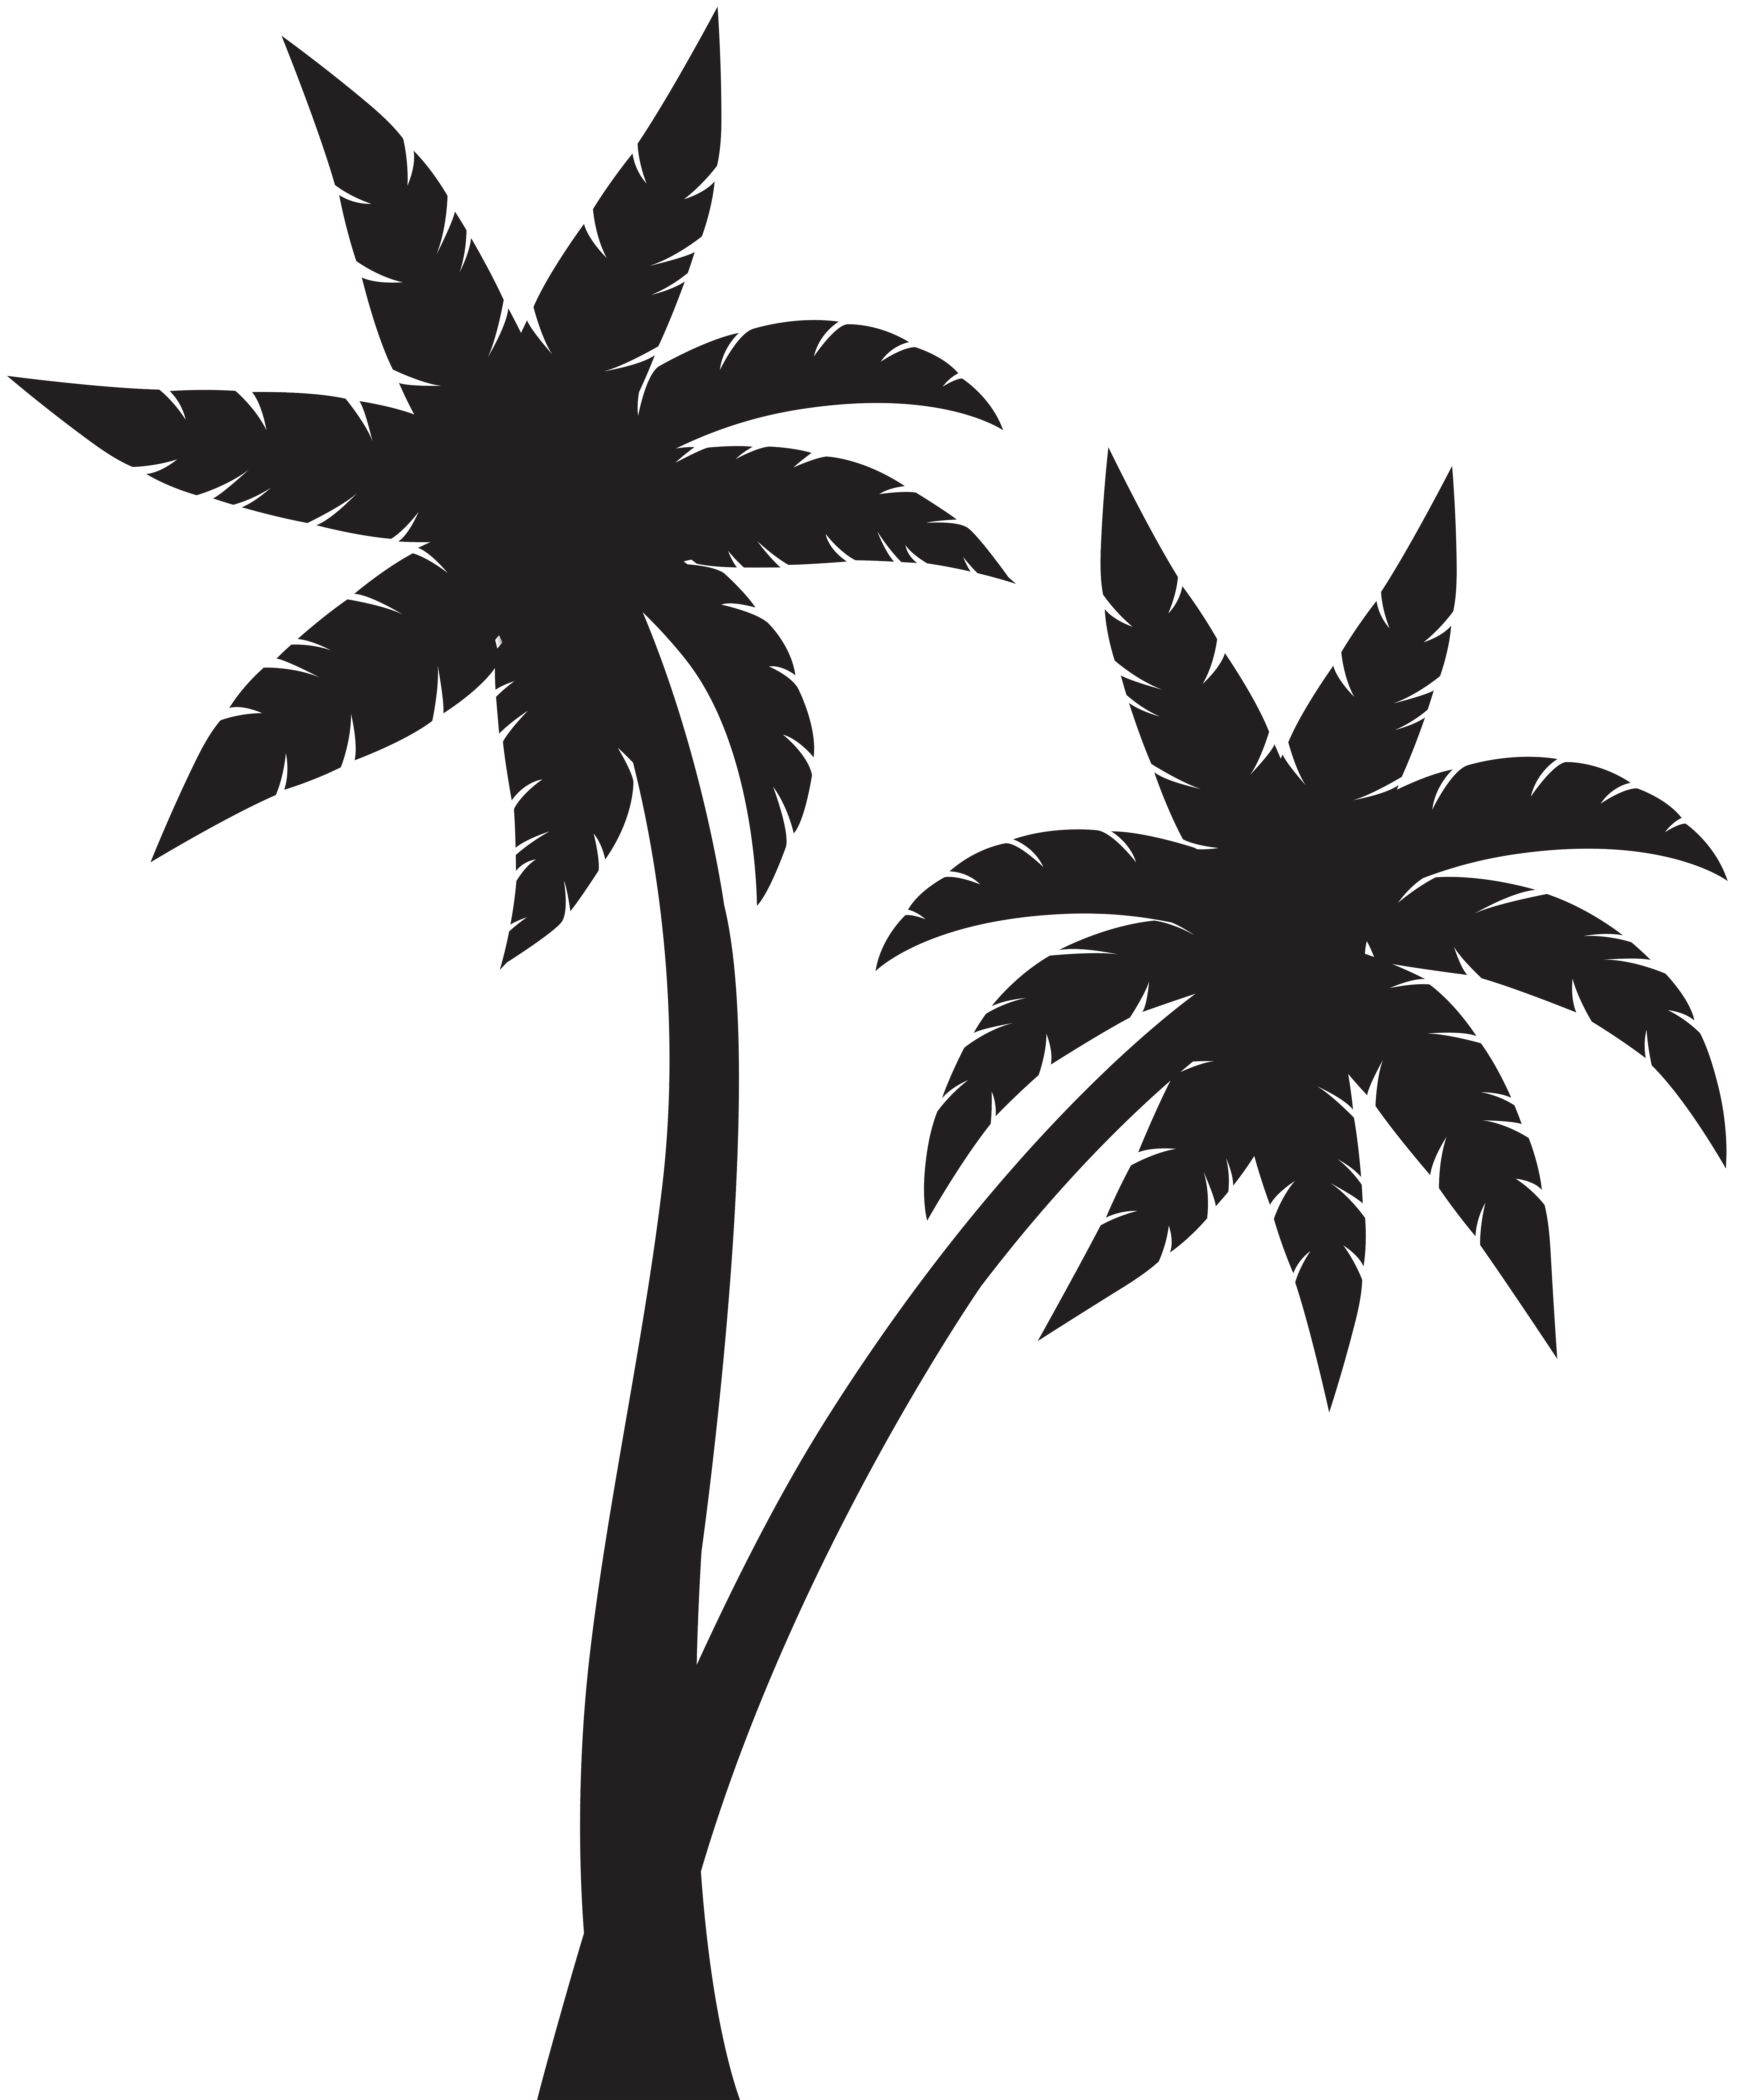 silhouette clipart plant